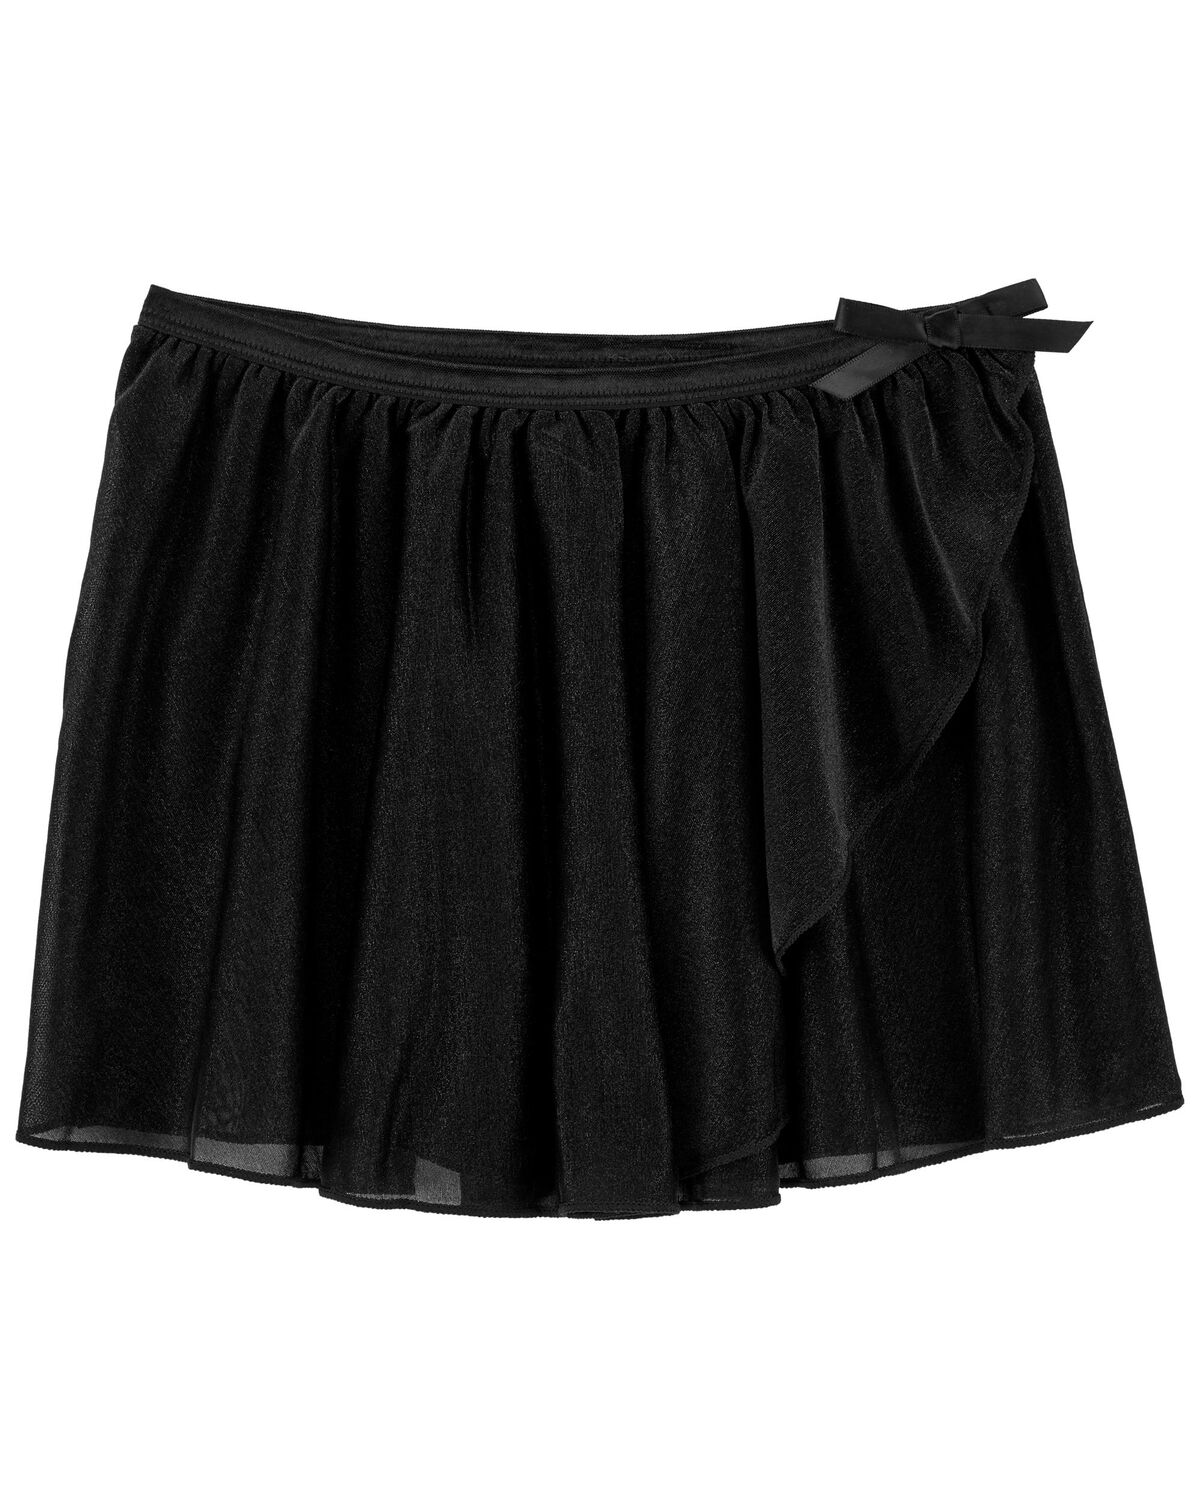 Black Kid Chiffon Dance Skirt | carters.com